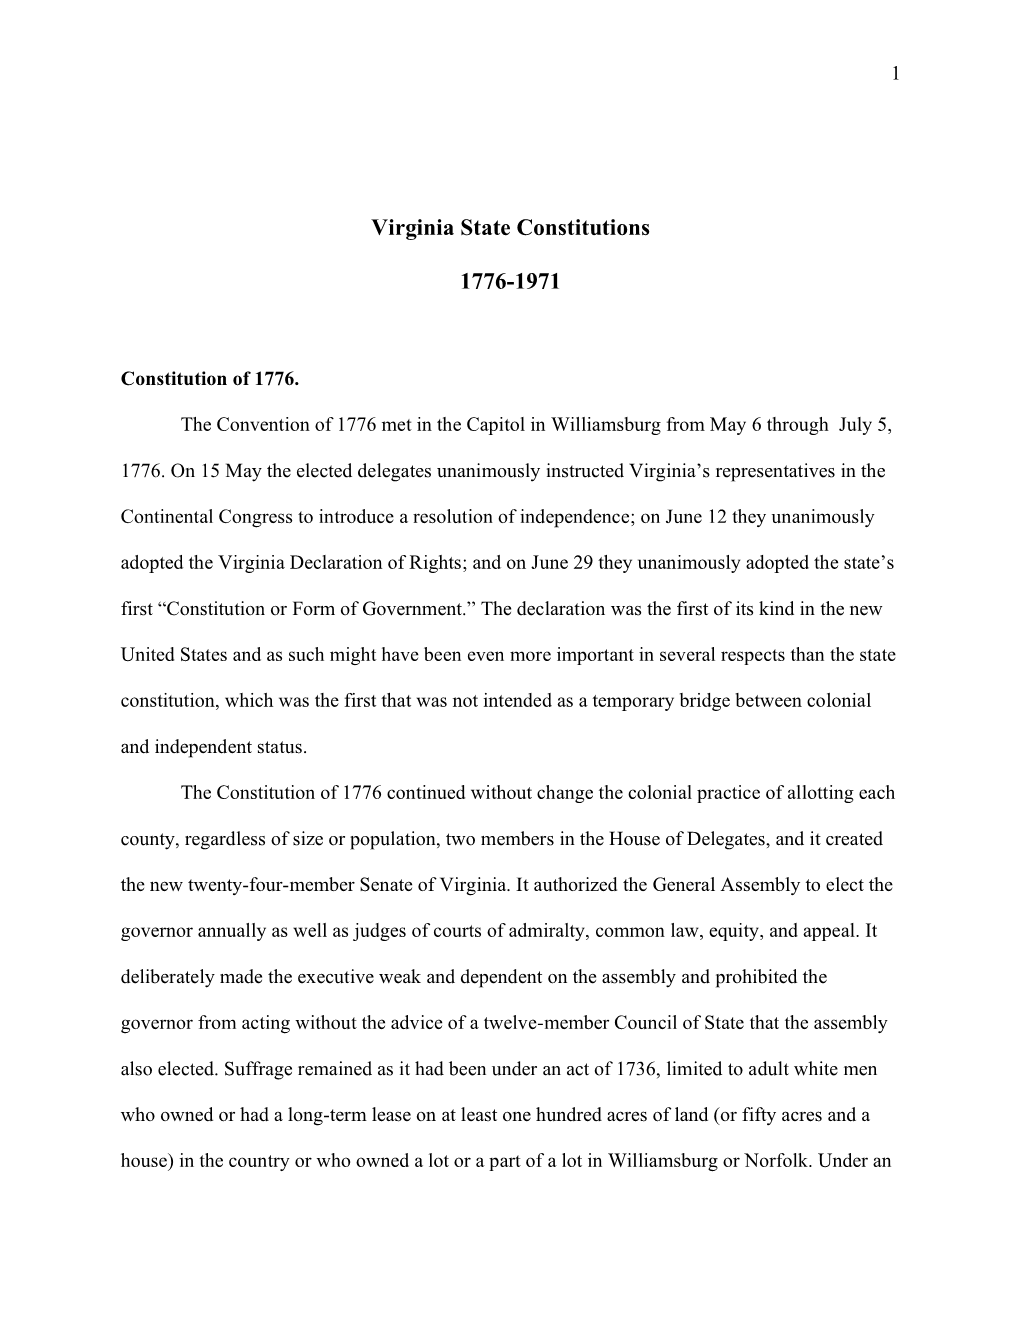 Virginia's Constitution History, 1776—1971